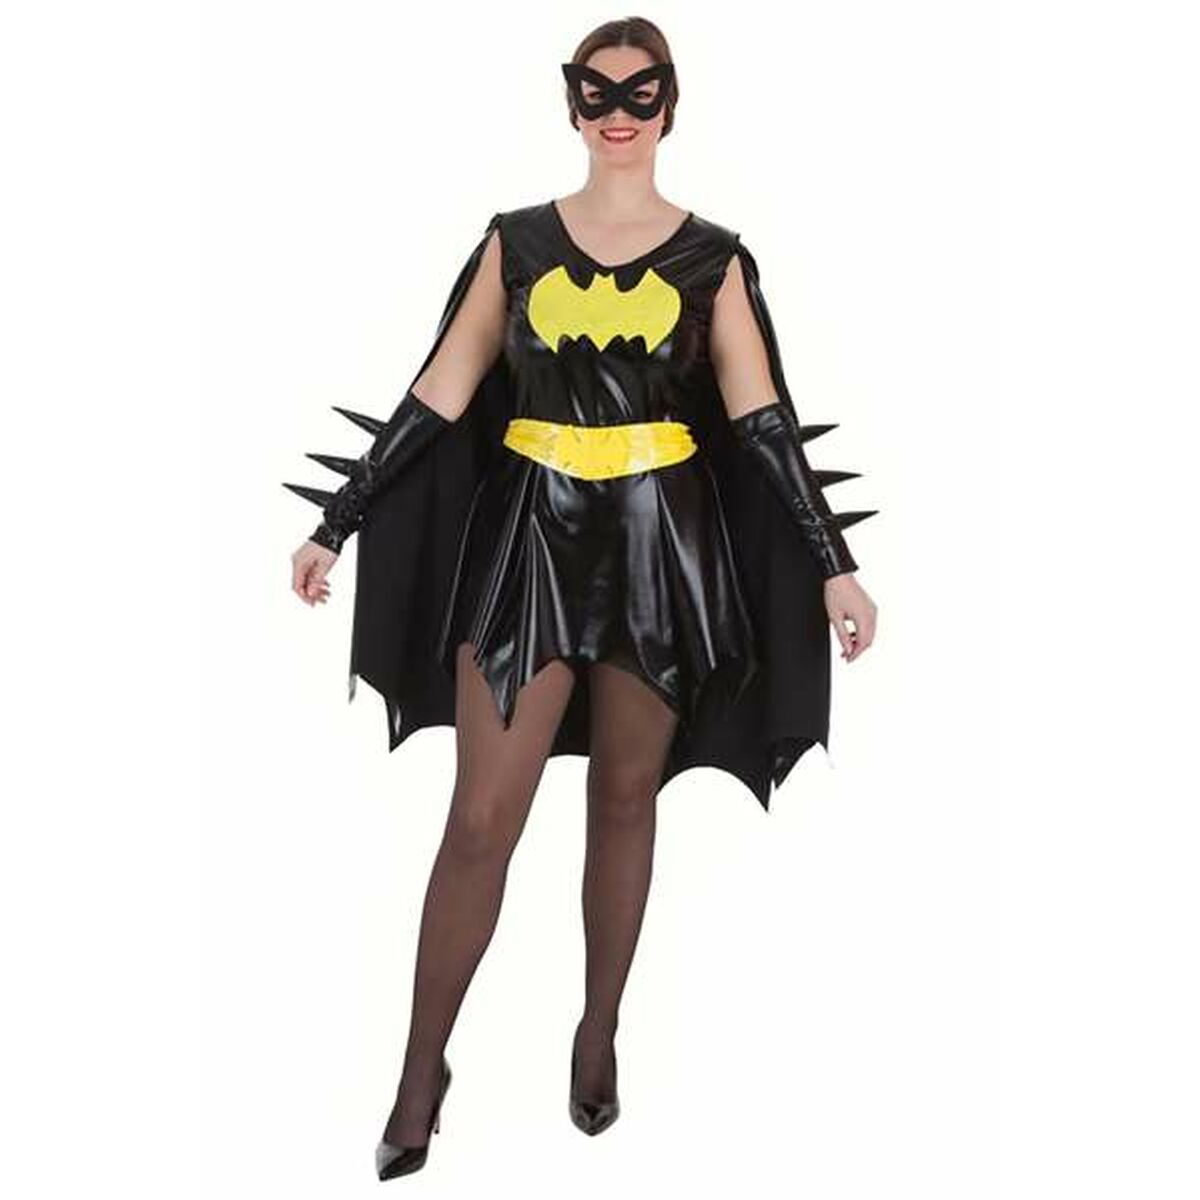 Costume for Adults Bat Superheroine 2 Pieces